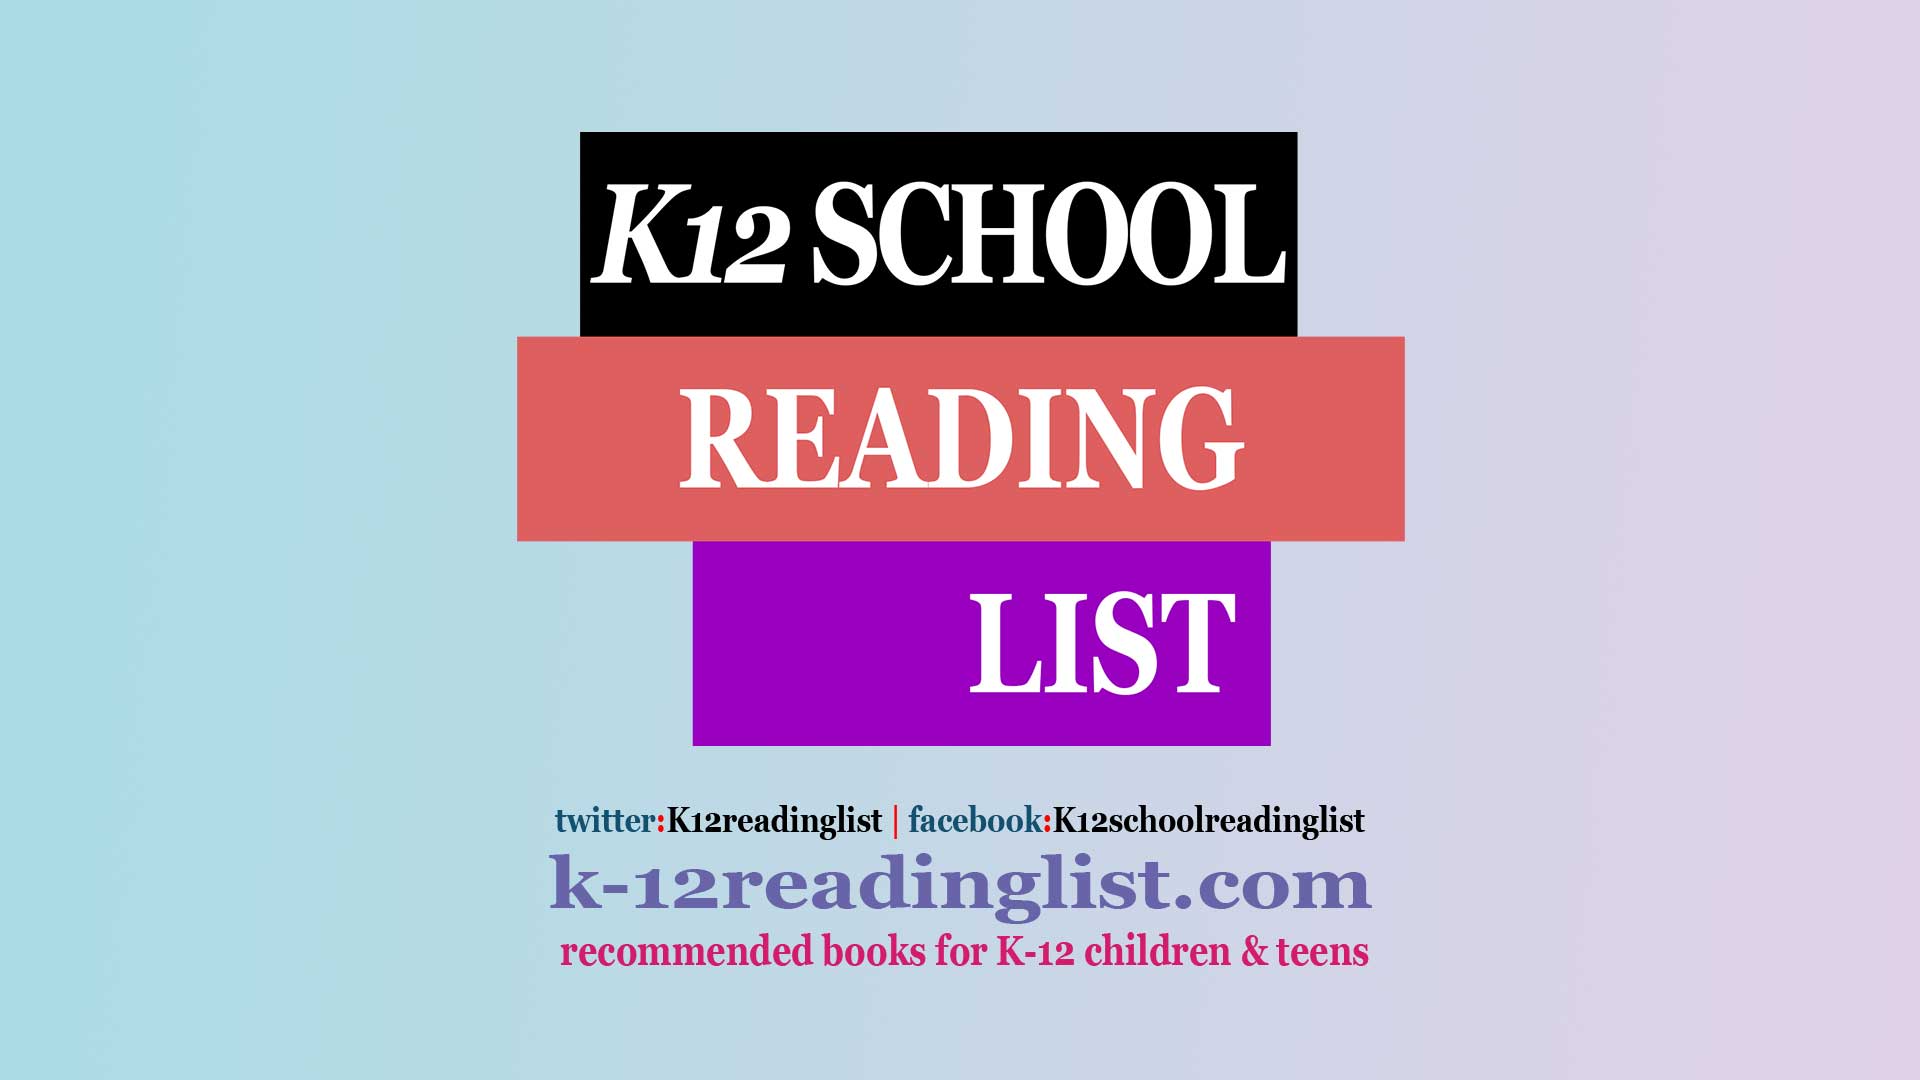 K-12 School Reading List website banner